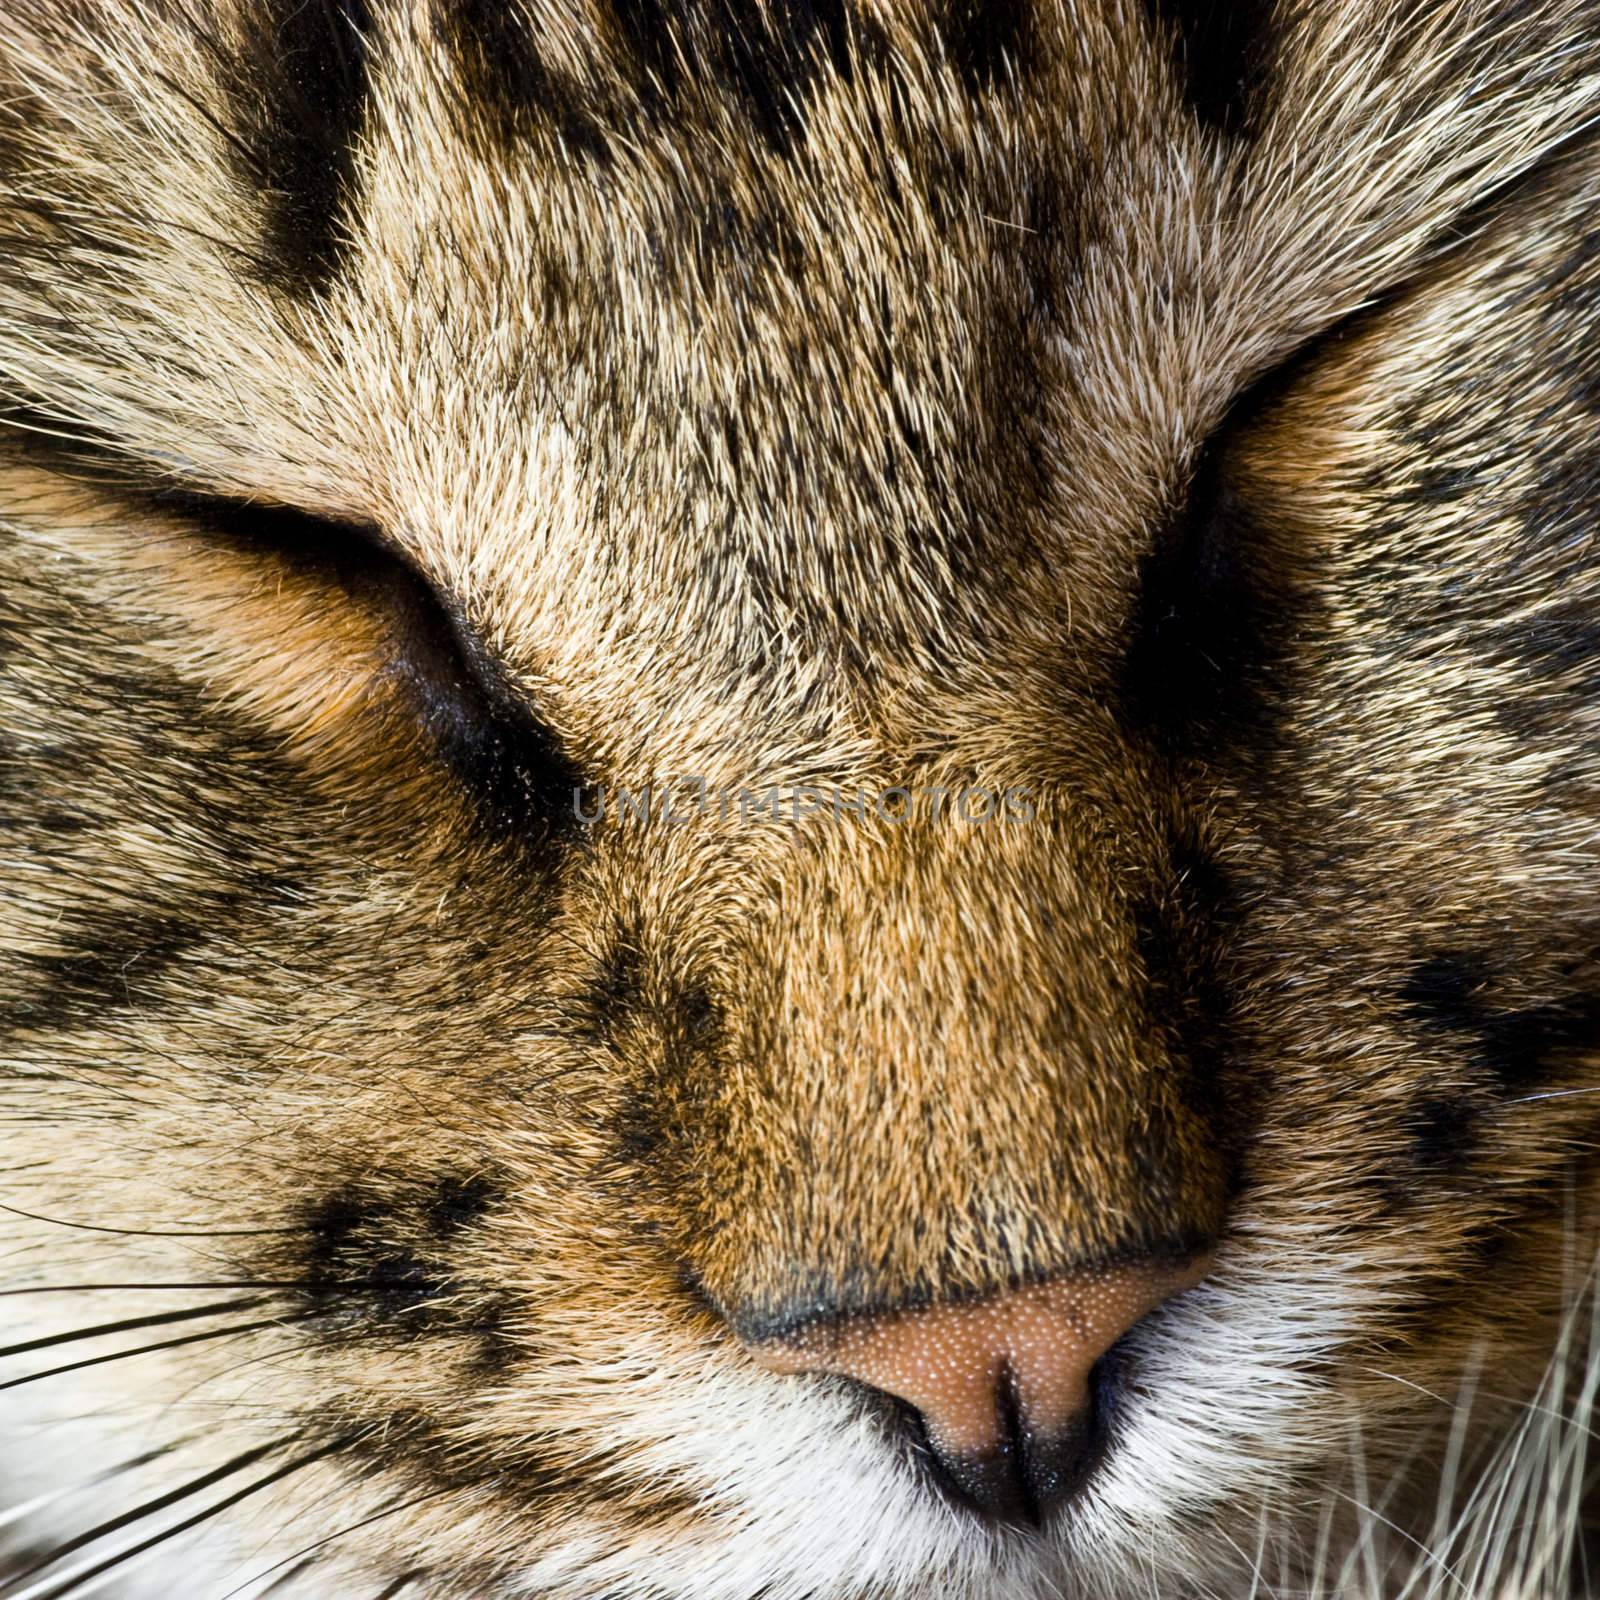 Sleeping cat by naumoid